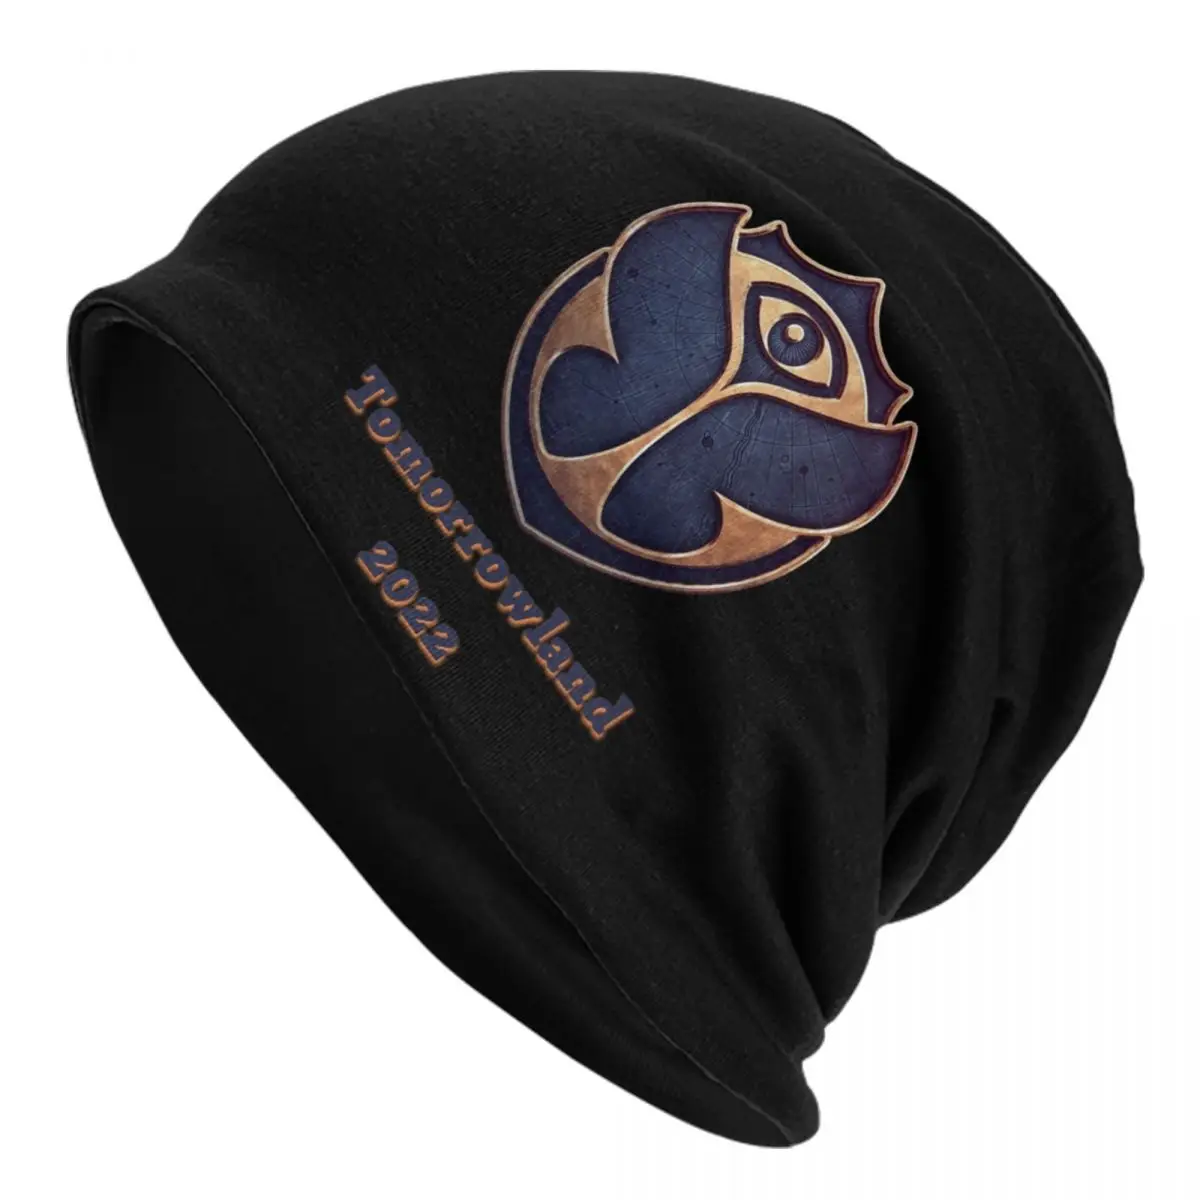 

Tomorrowland шапочки с логотипом шапки унисекс зимняя теплая вязаная шапка мужская модная взрослая Праздничная шляпа шапки уличная Лыжная шапка